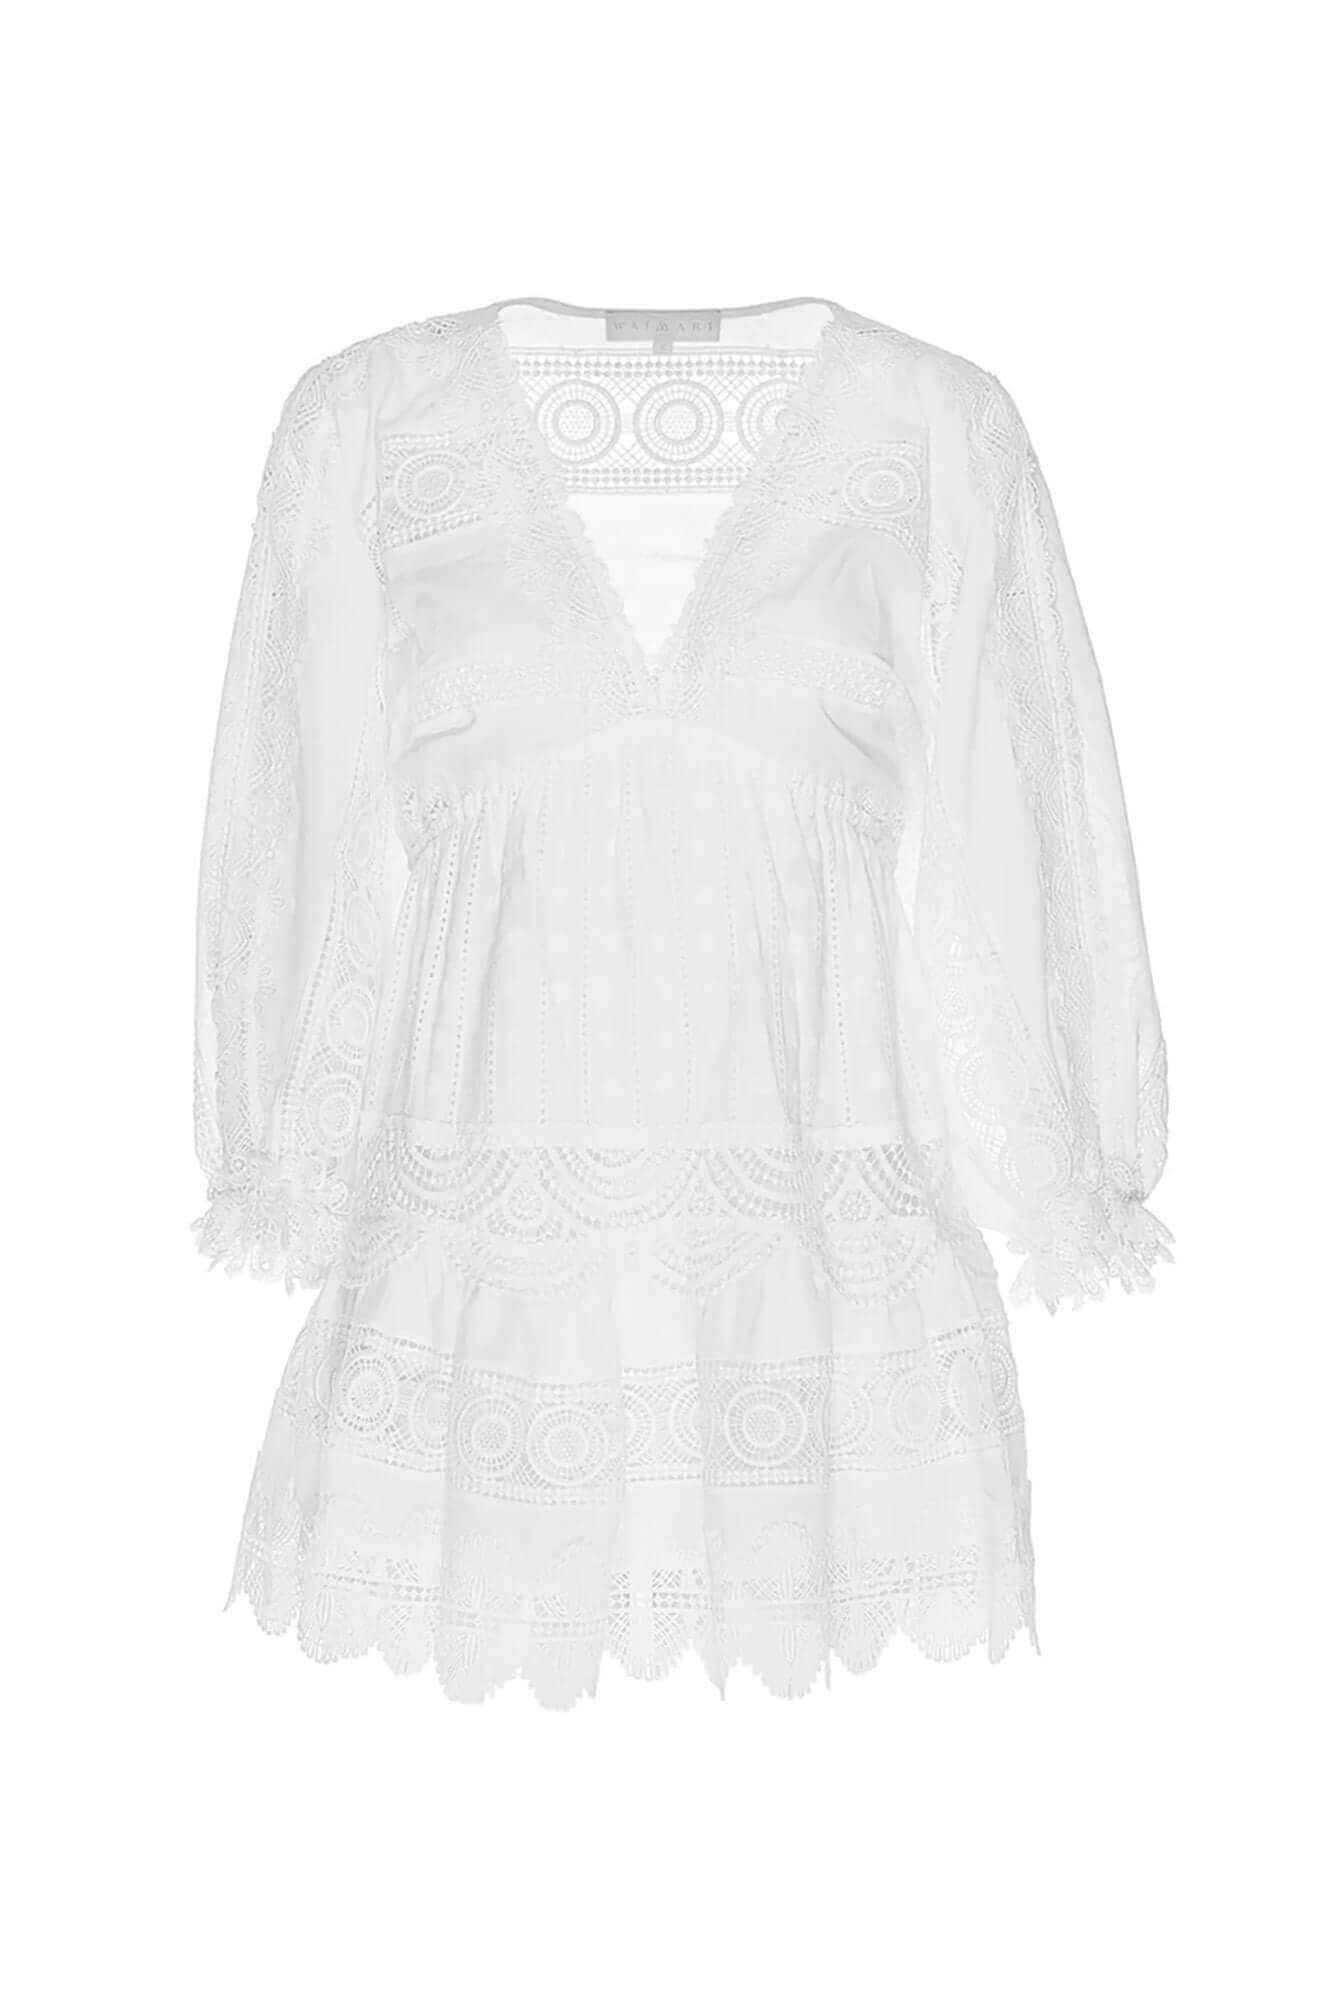 Lucia Dress in White